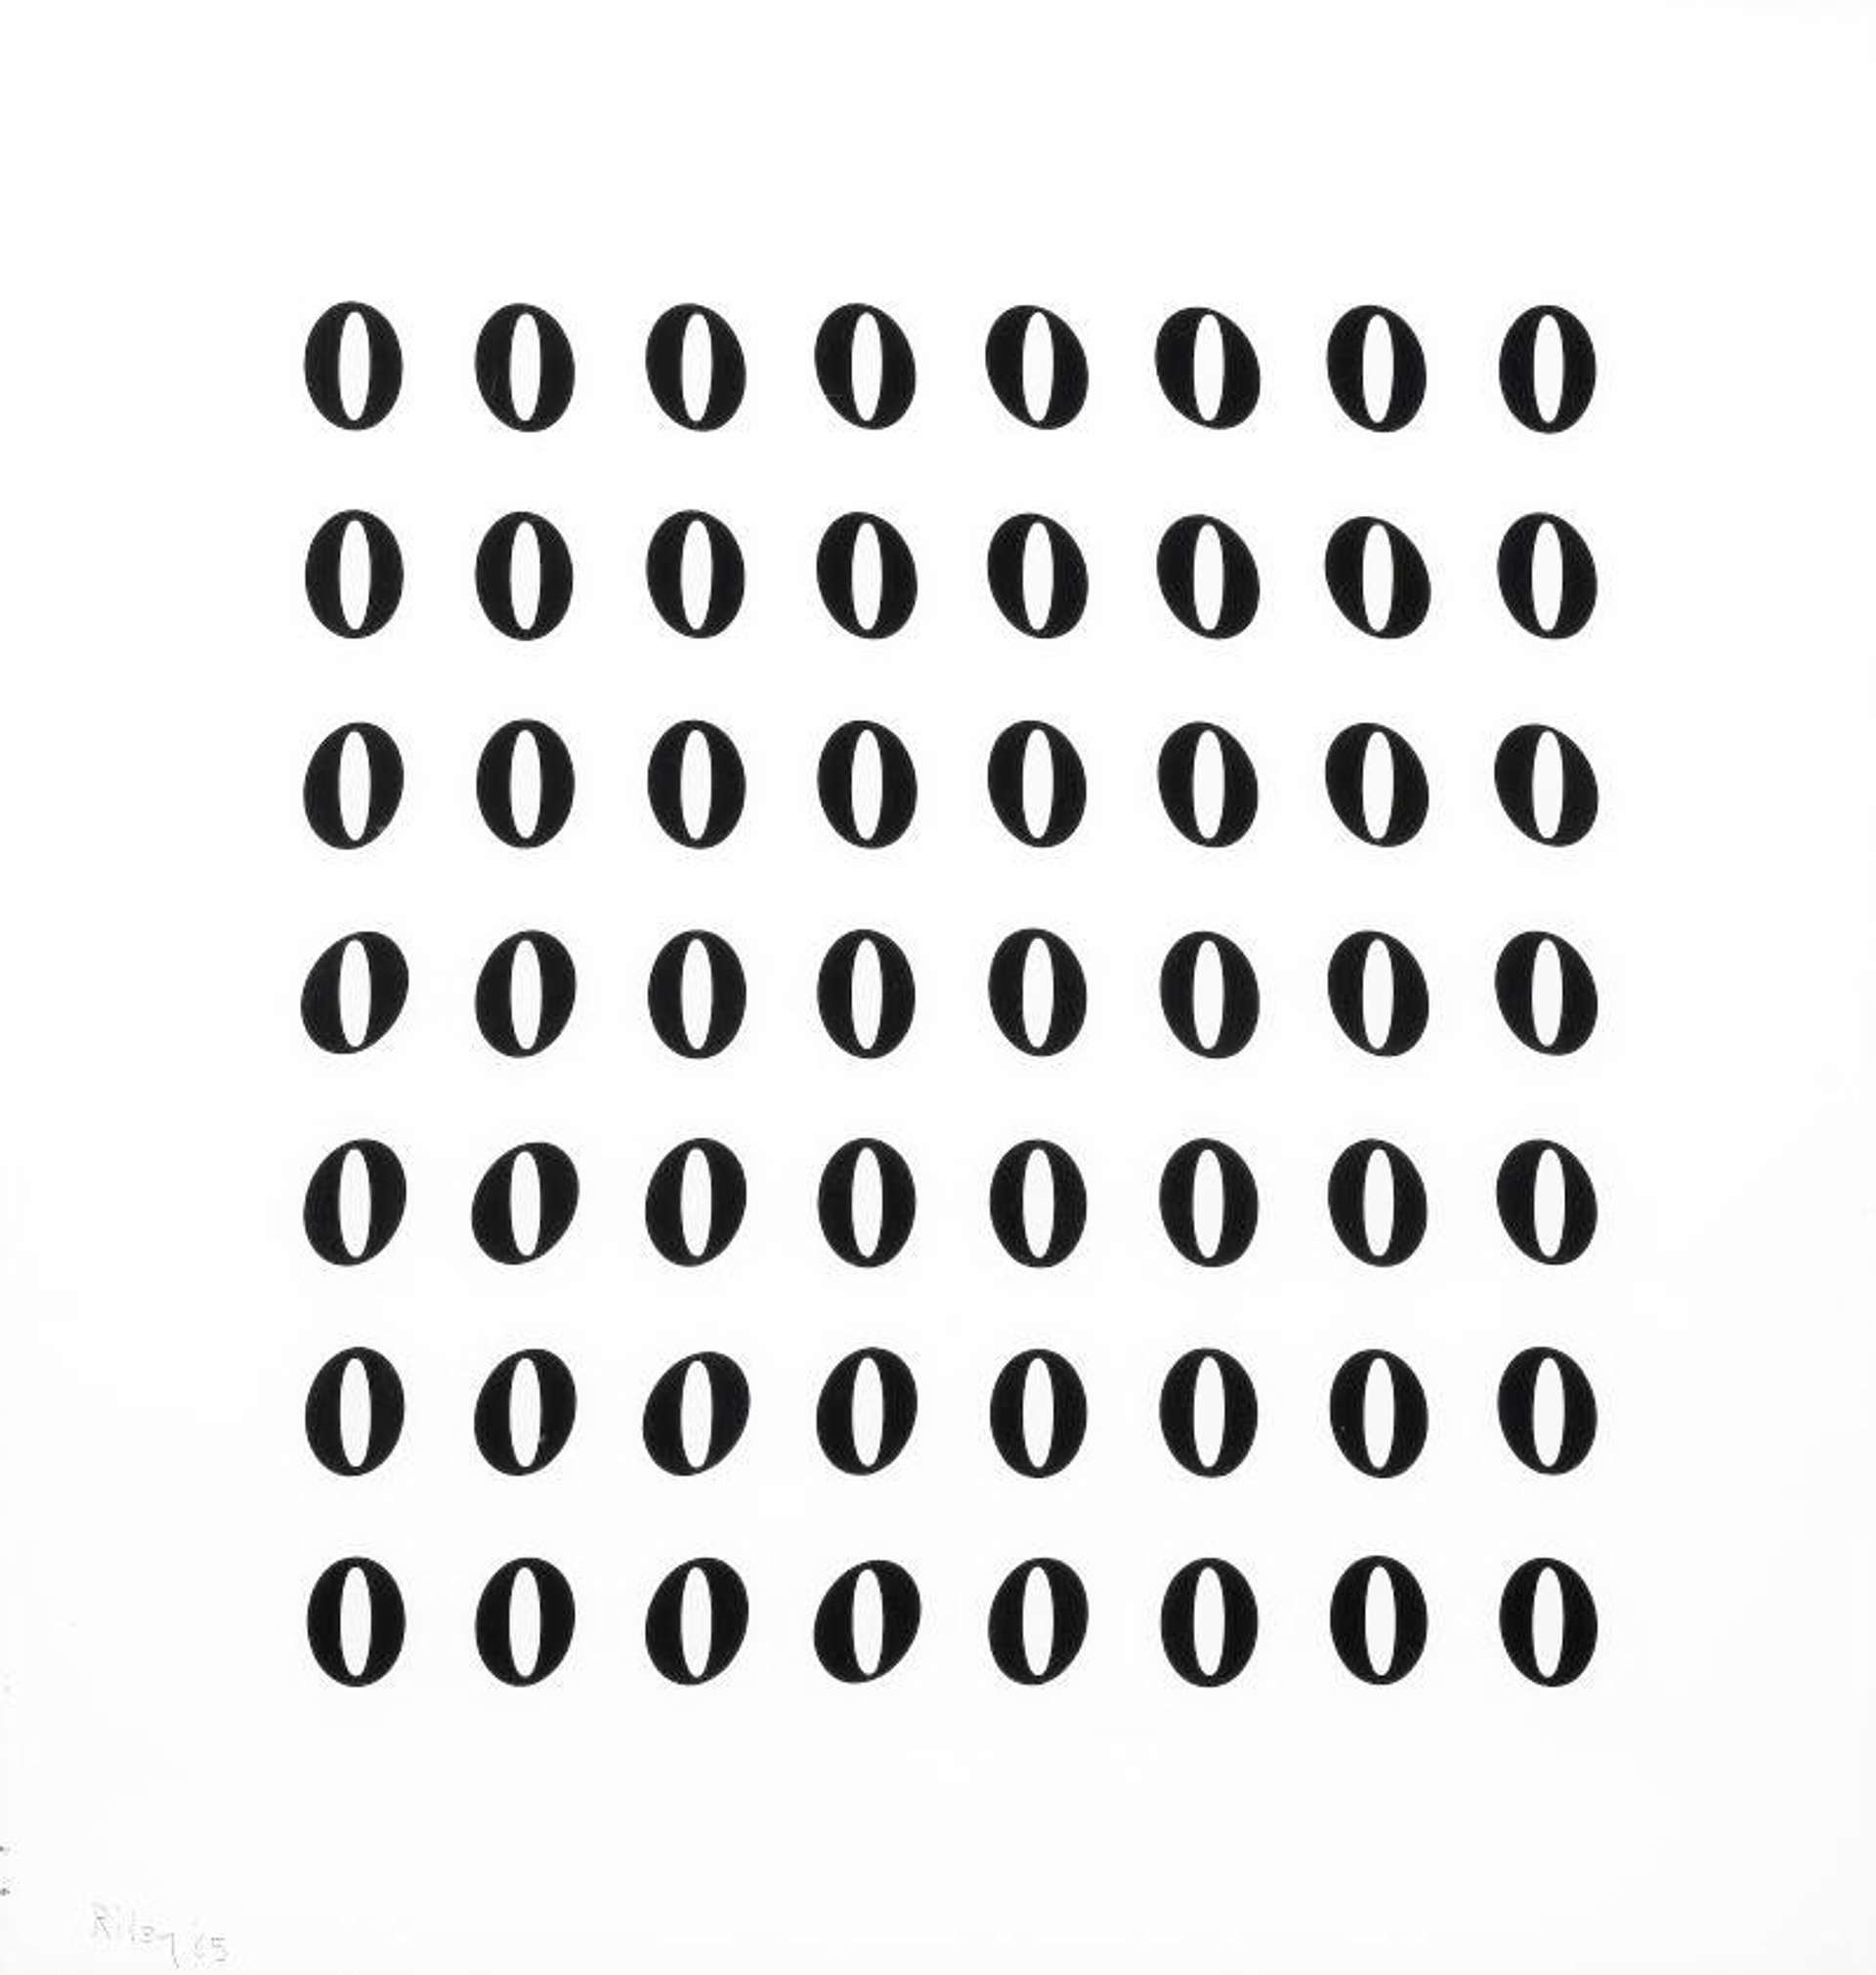 Bridget Riley’s Fragment 4. An Op Art screenprint of eight columns of black circular shapes against a white background. 